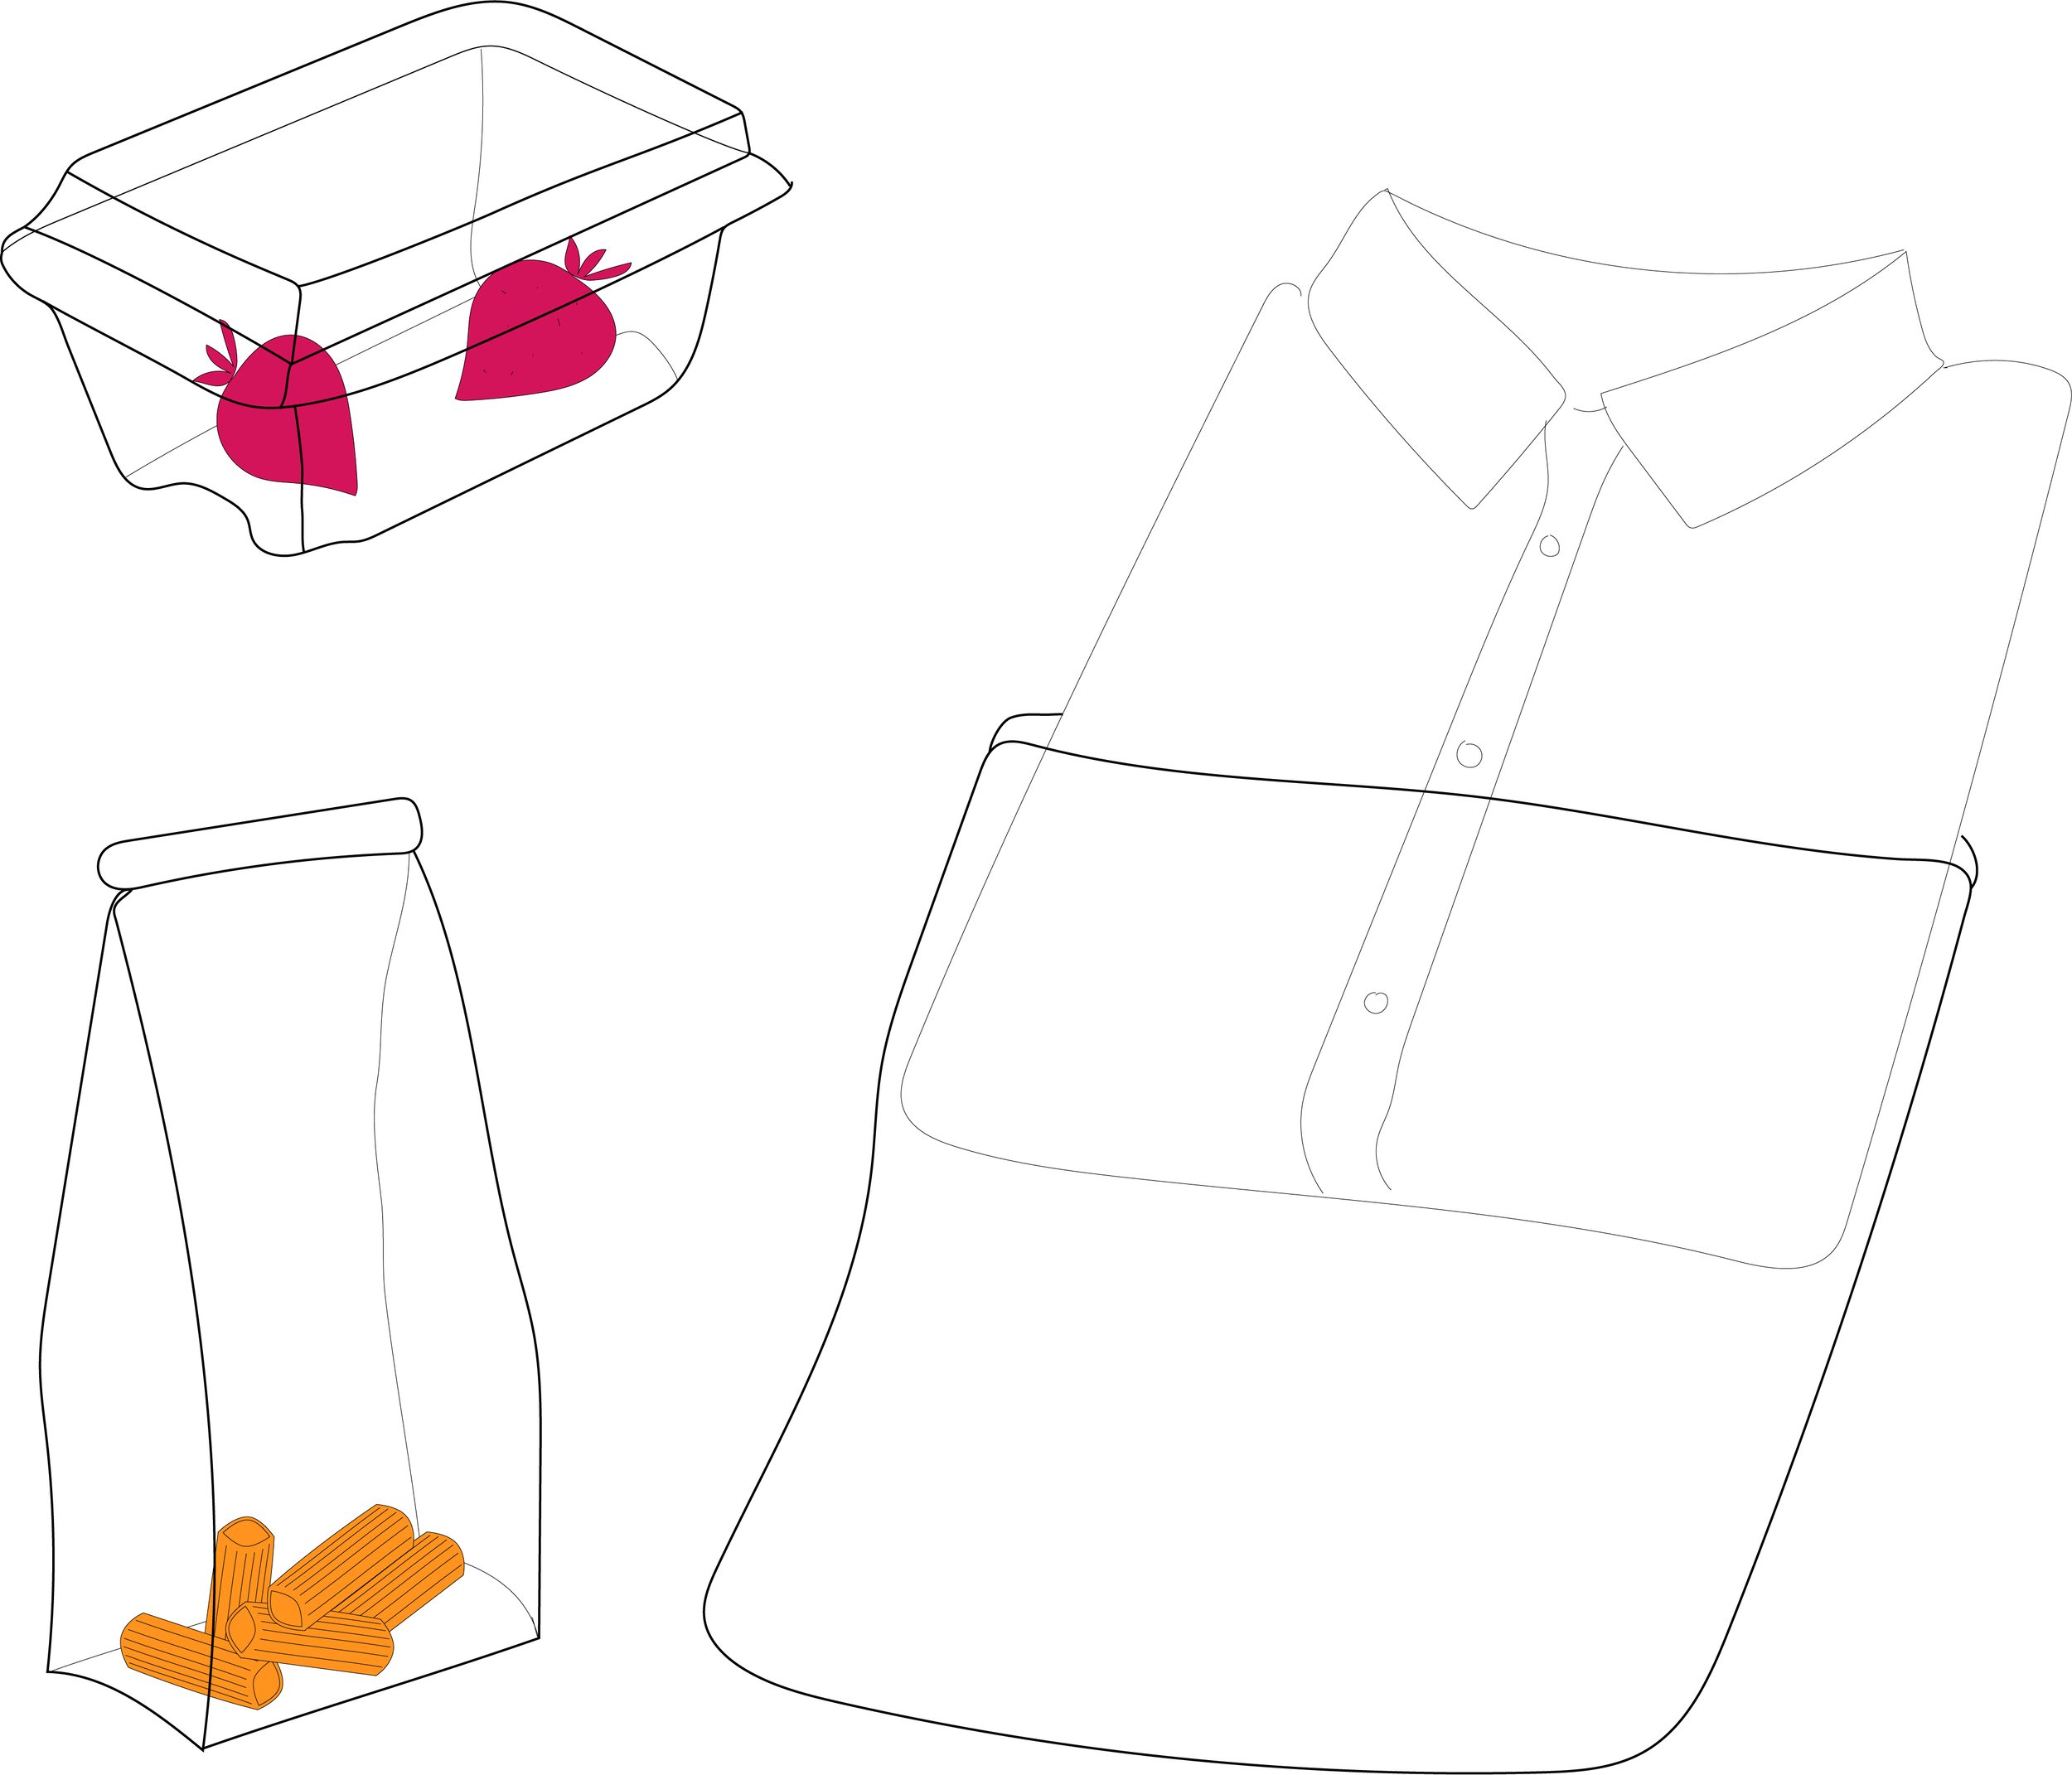 PermaPack Packaging Design Illustrations.png